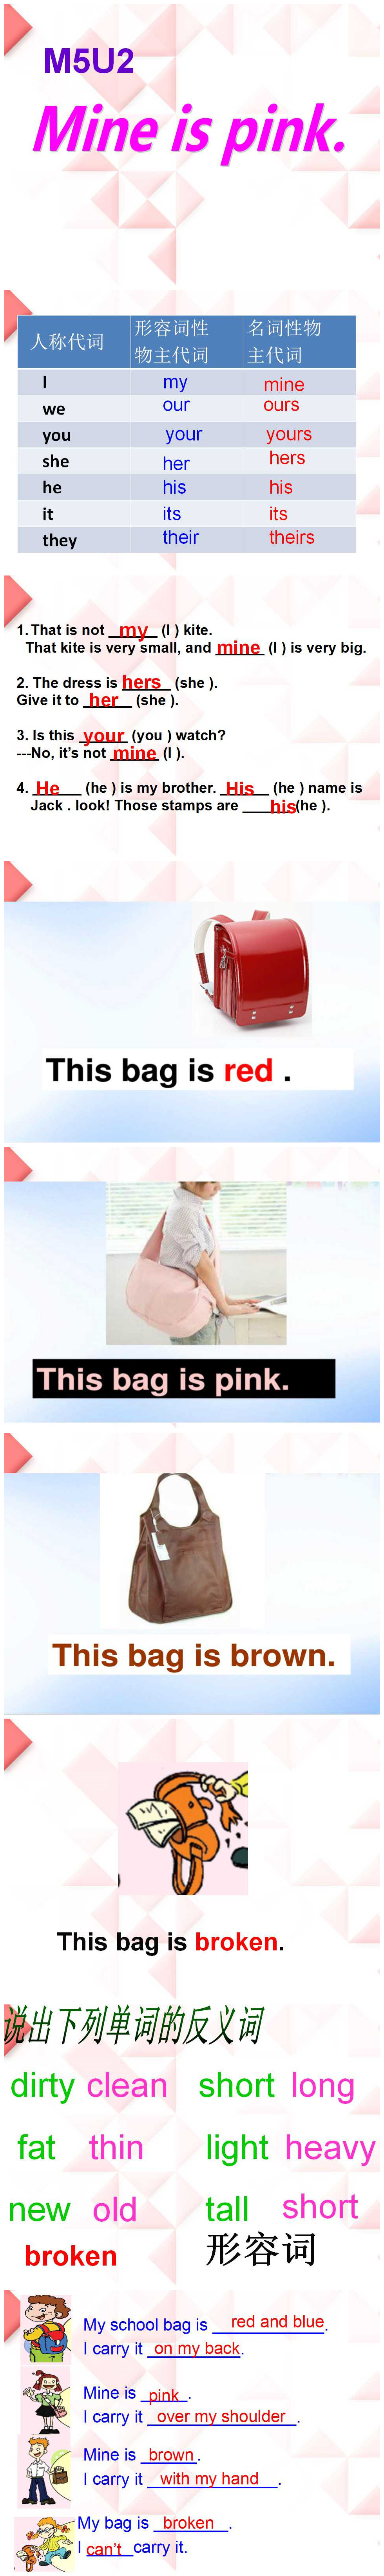 《Mine is pink》PPT课件2